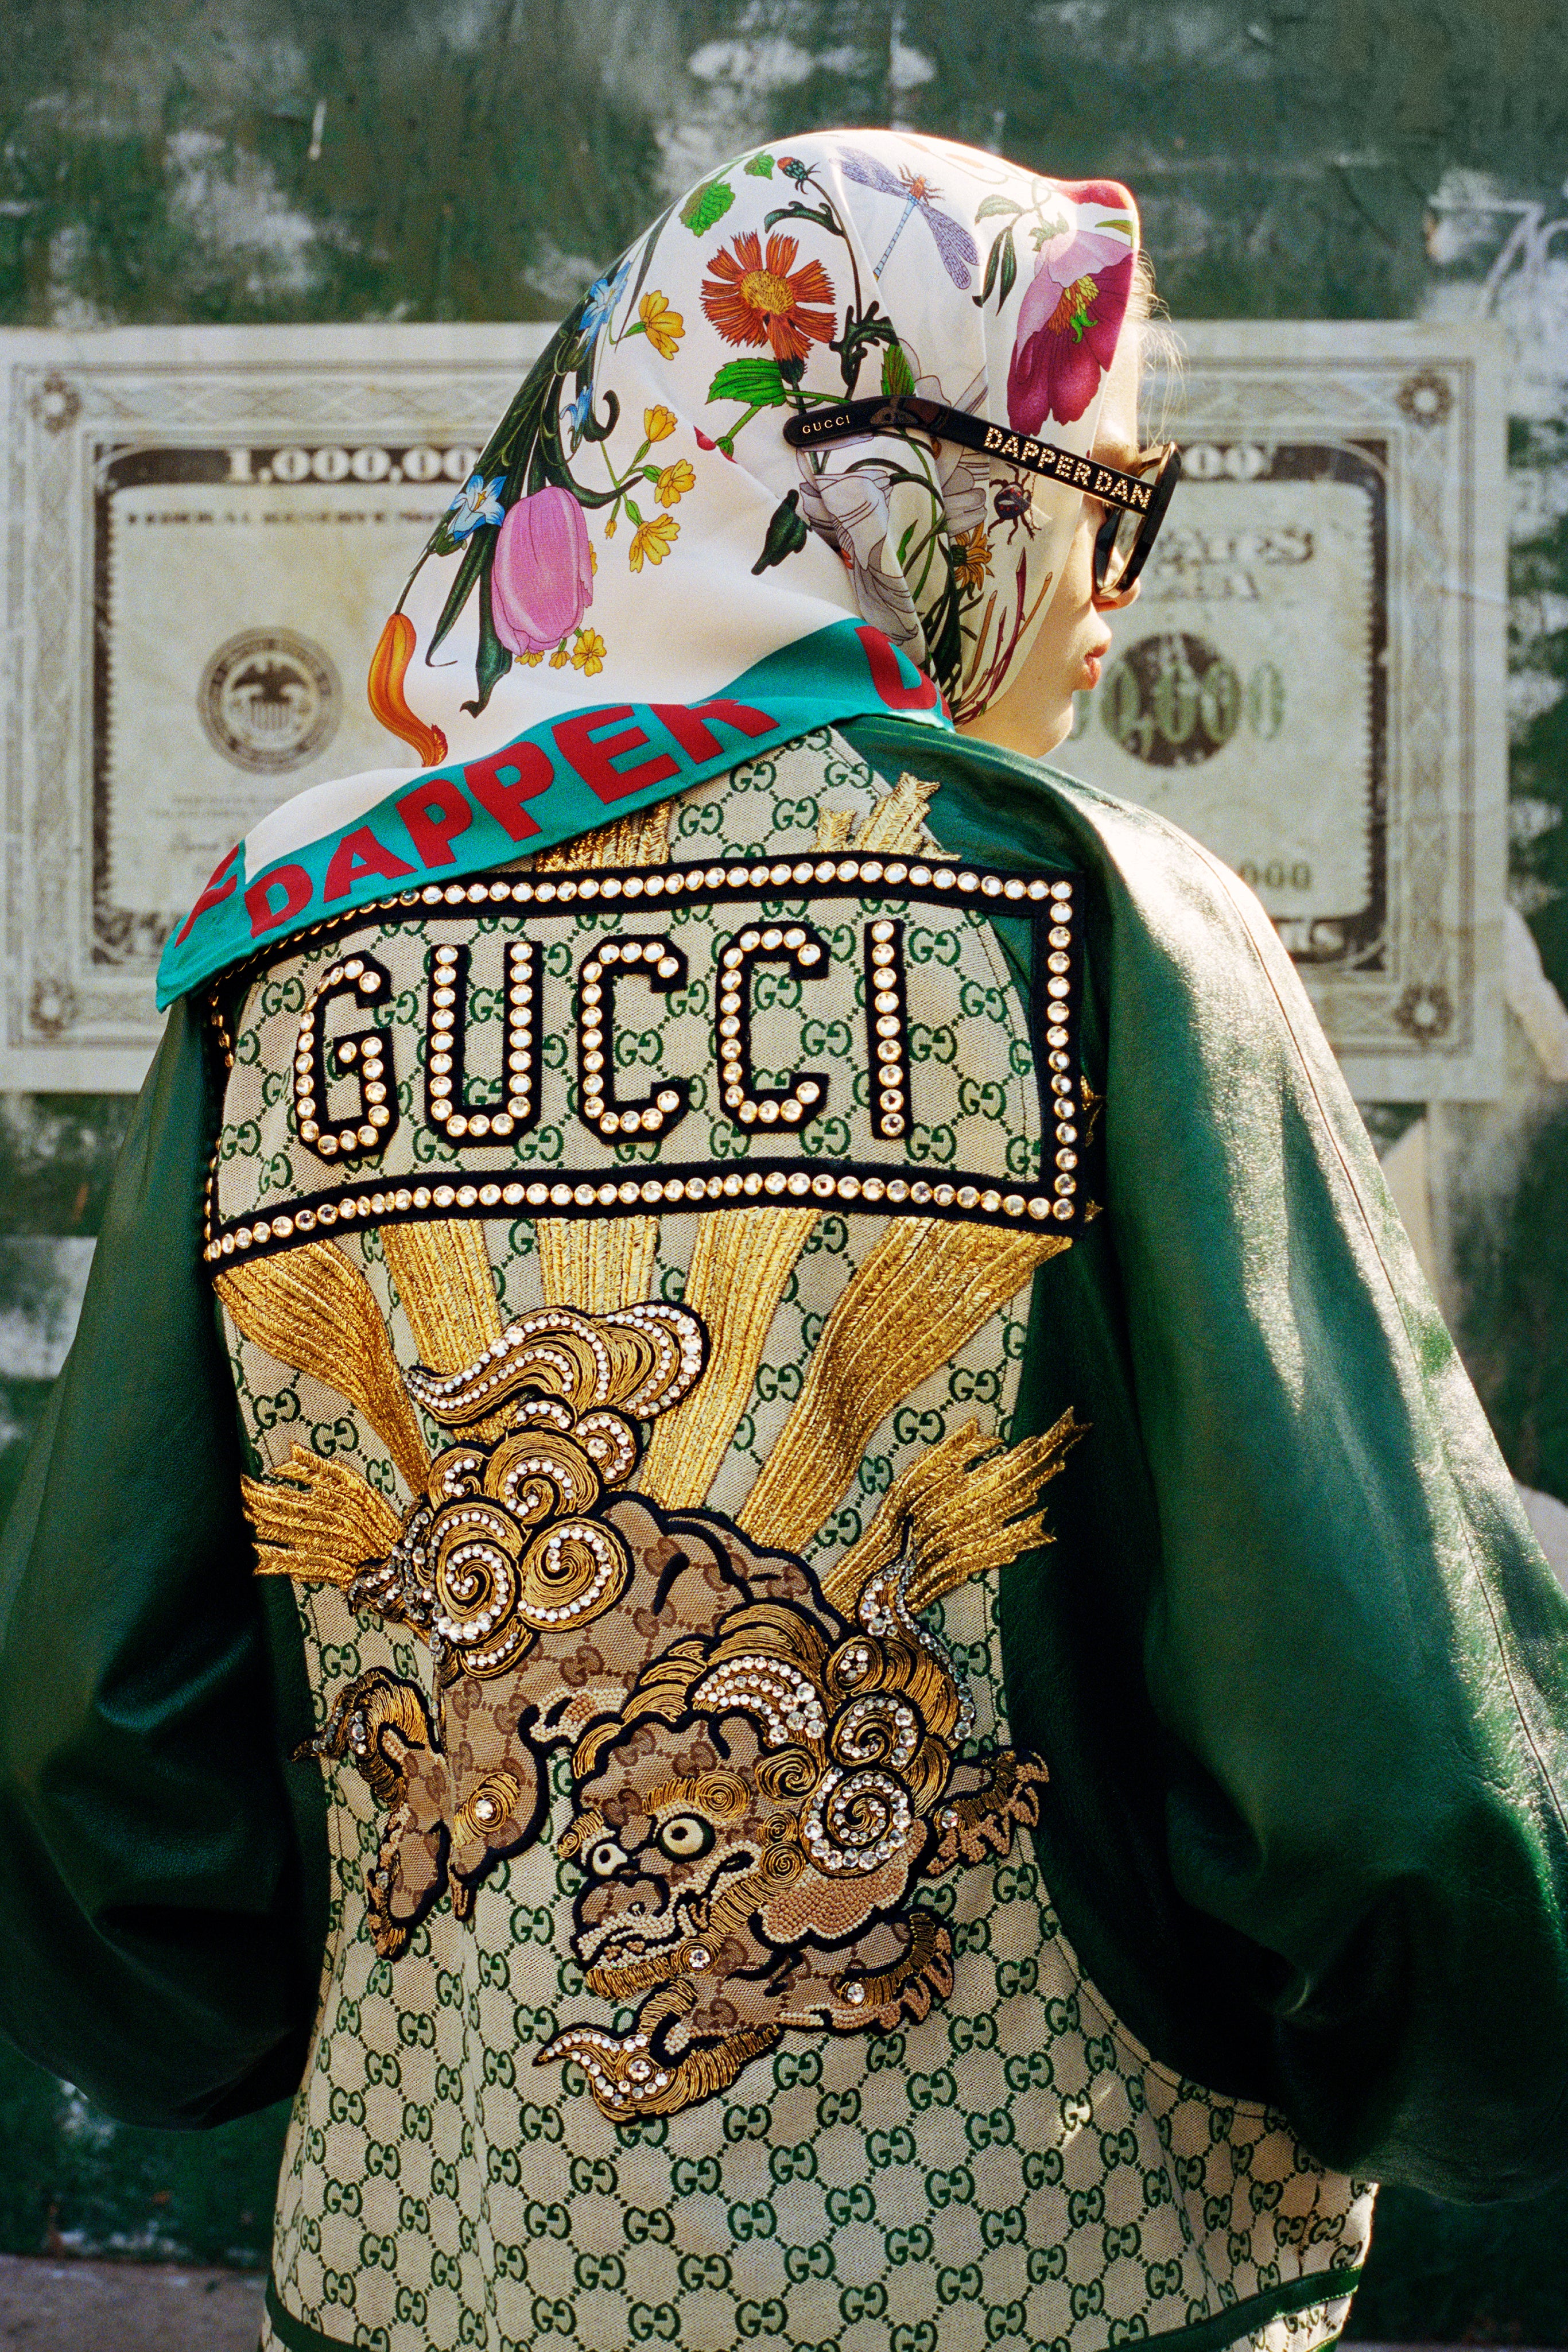 Gucci x Dapper Dan Clothing Collection 